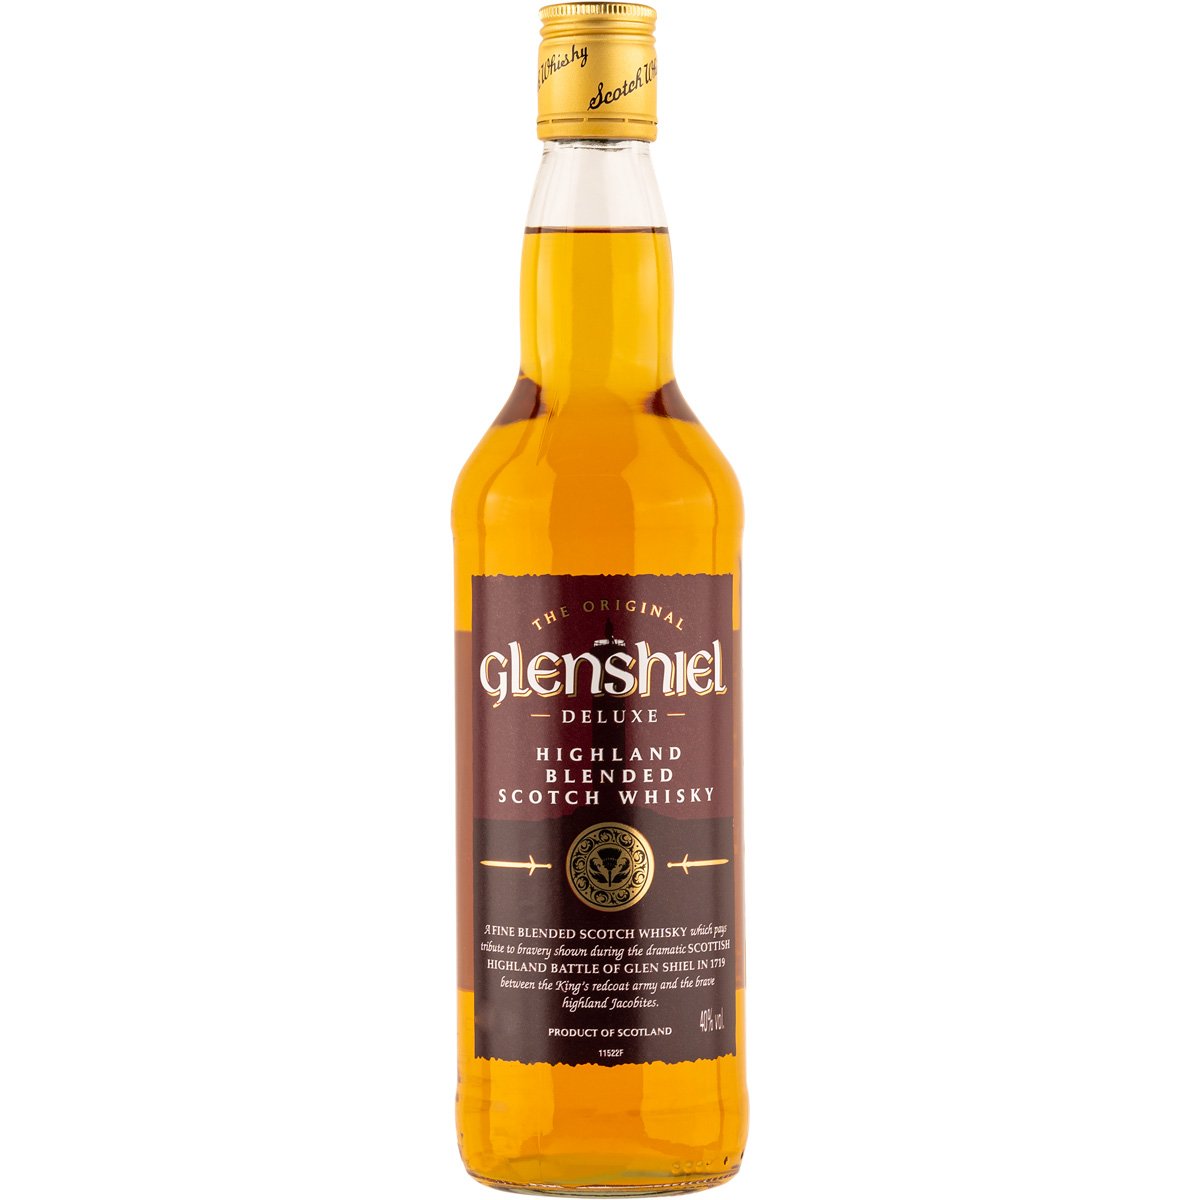 Віски Loch Lomond Glenshiel Deluxe Highland Blended Scotch Whisky 40% 1 л - фото 1